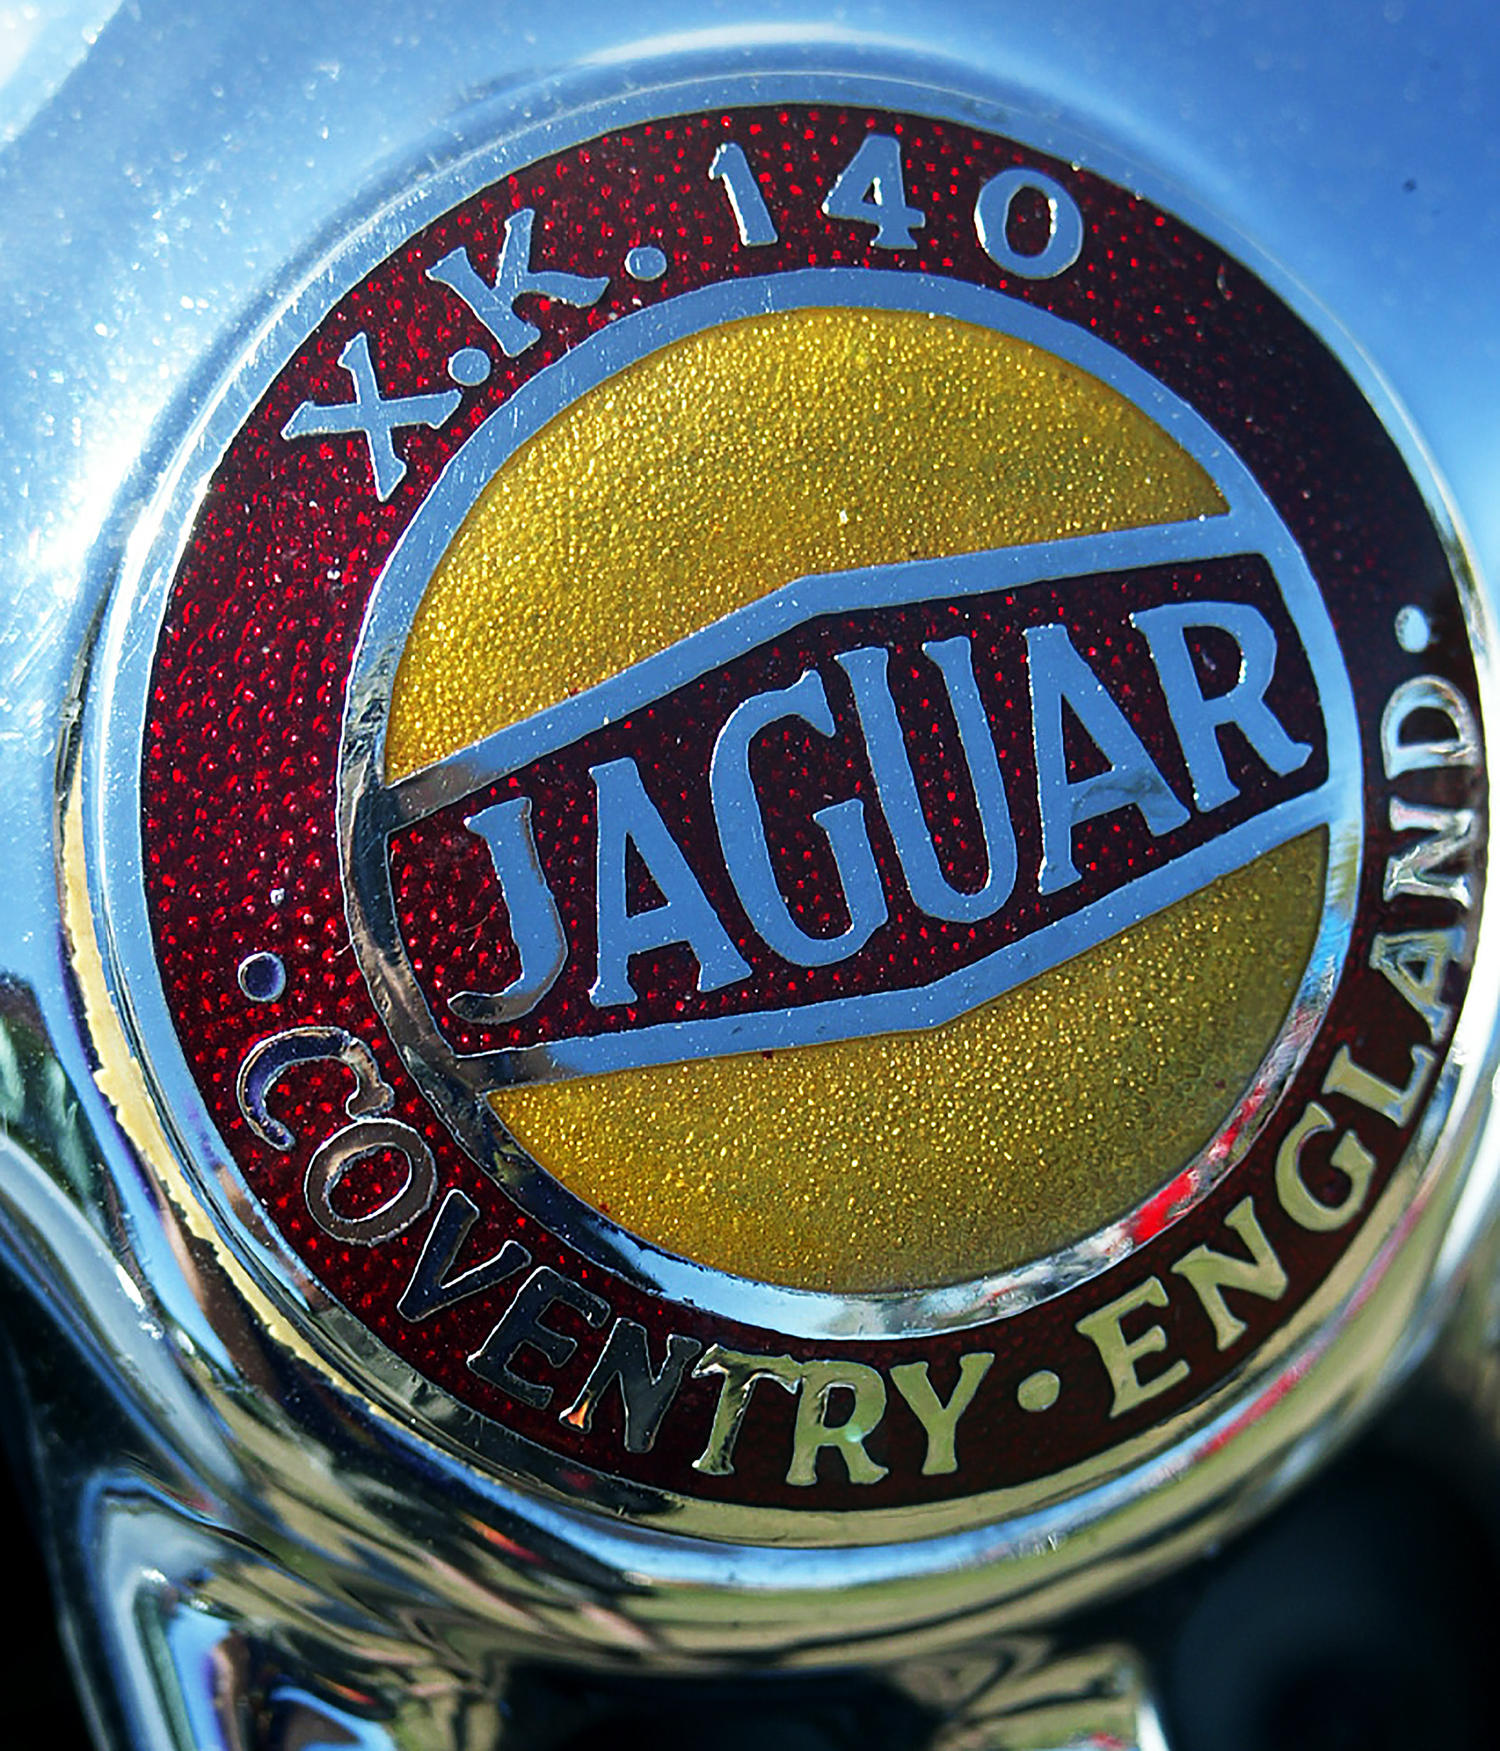 British typograph - Jaguar 